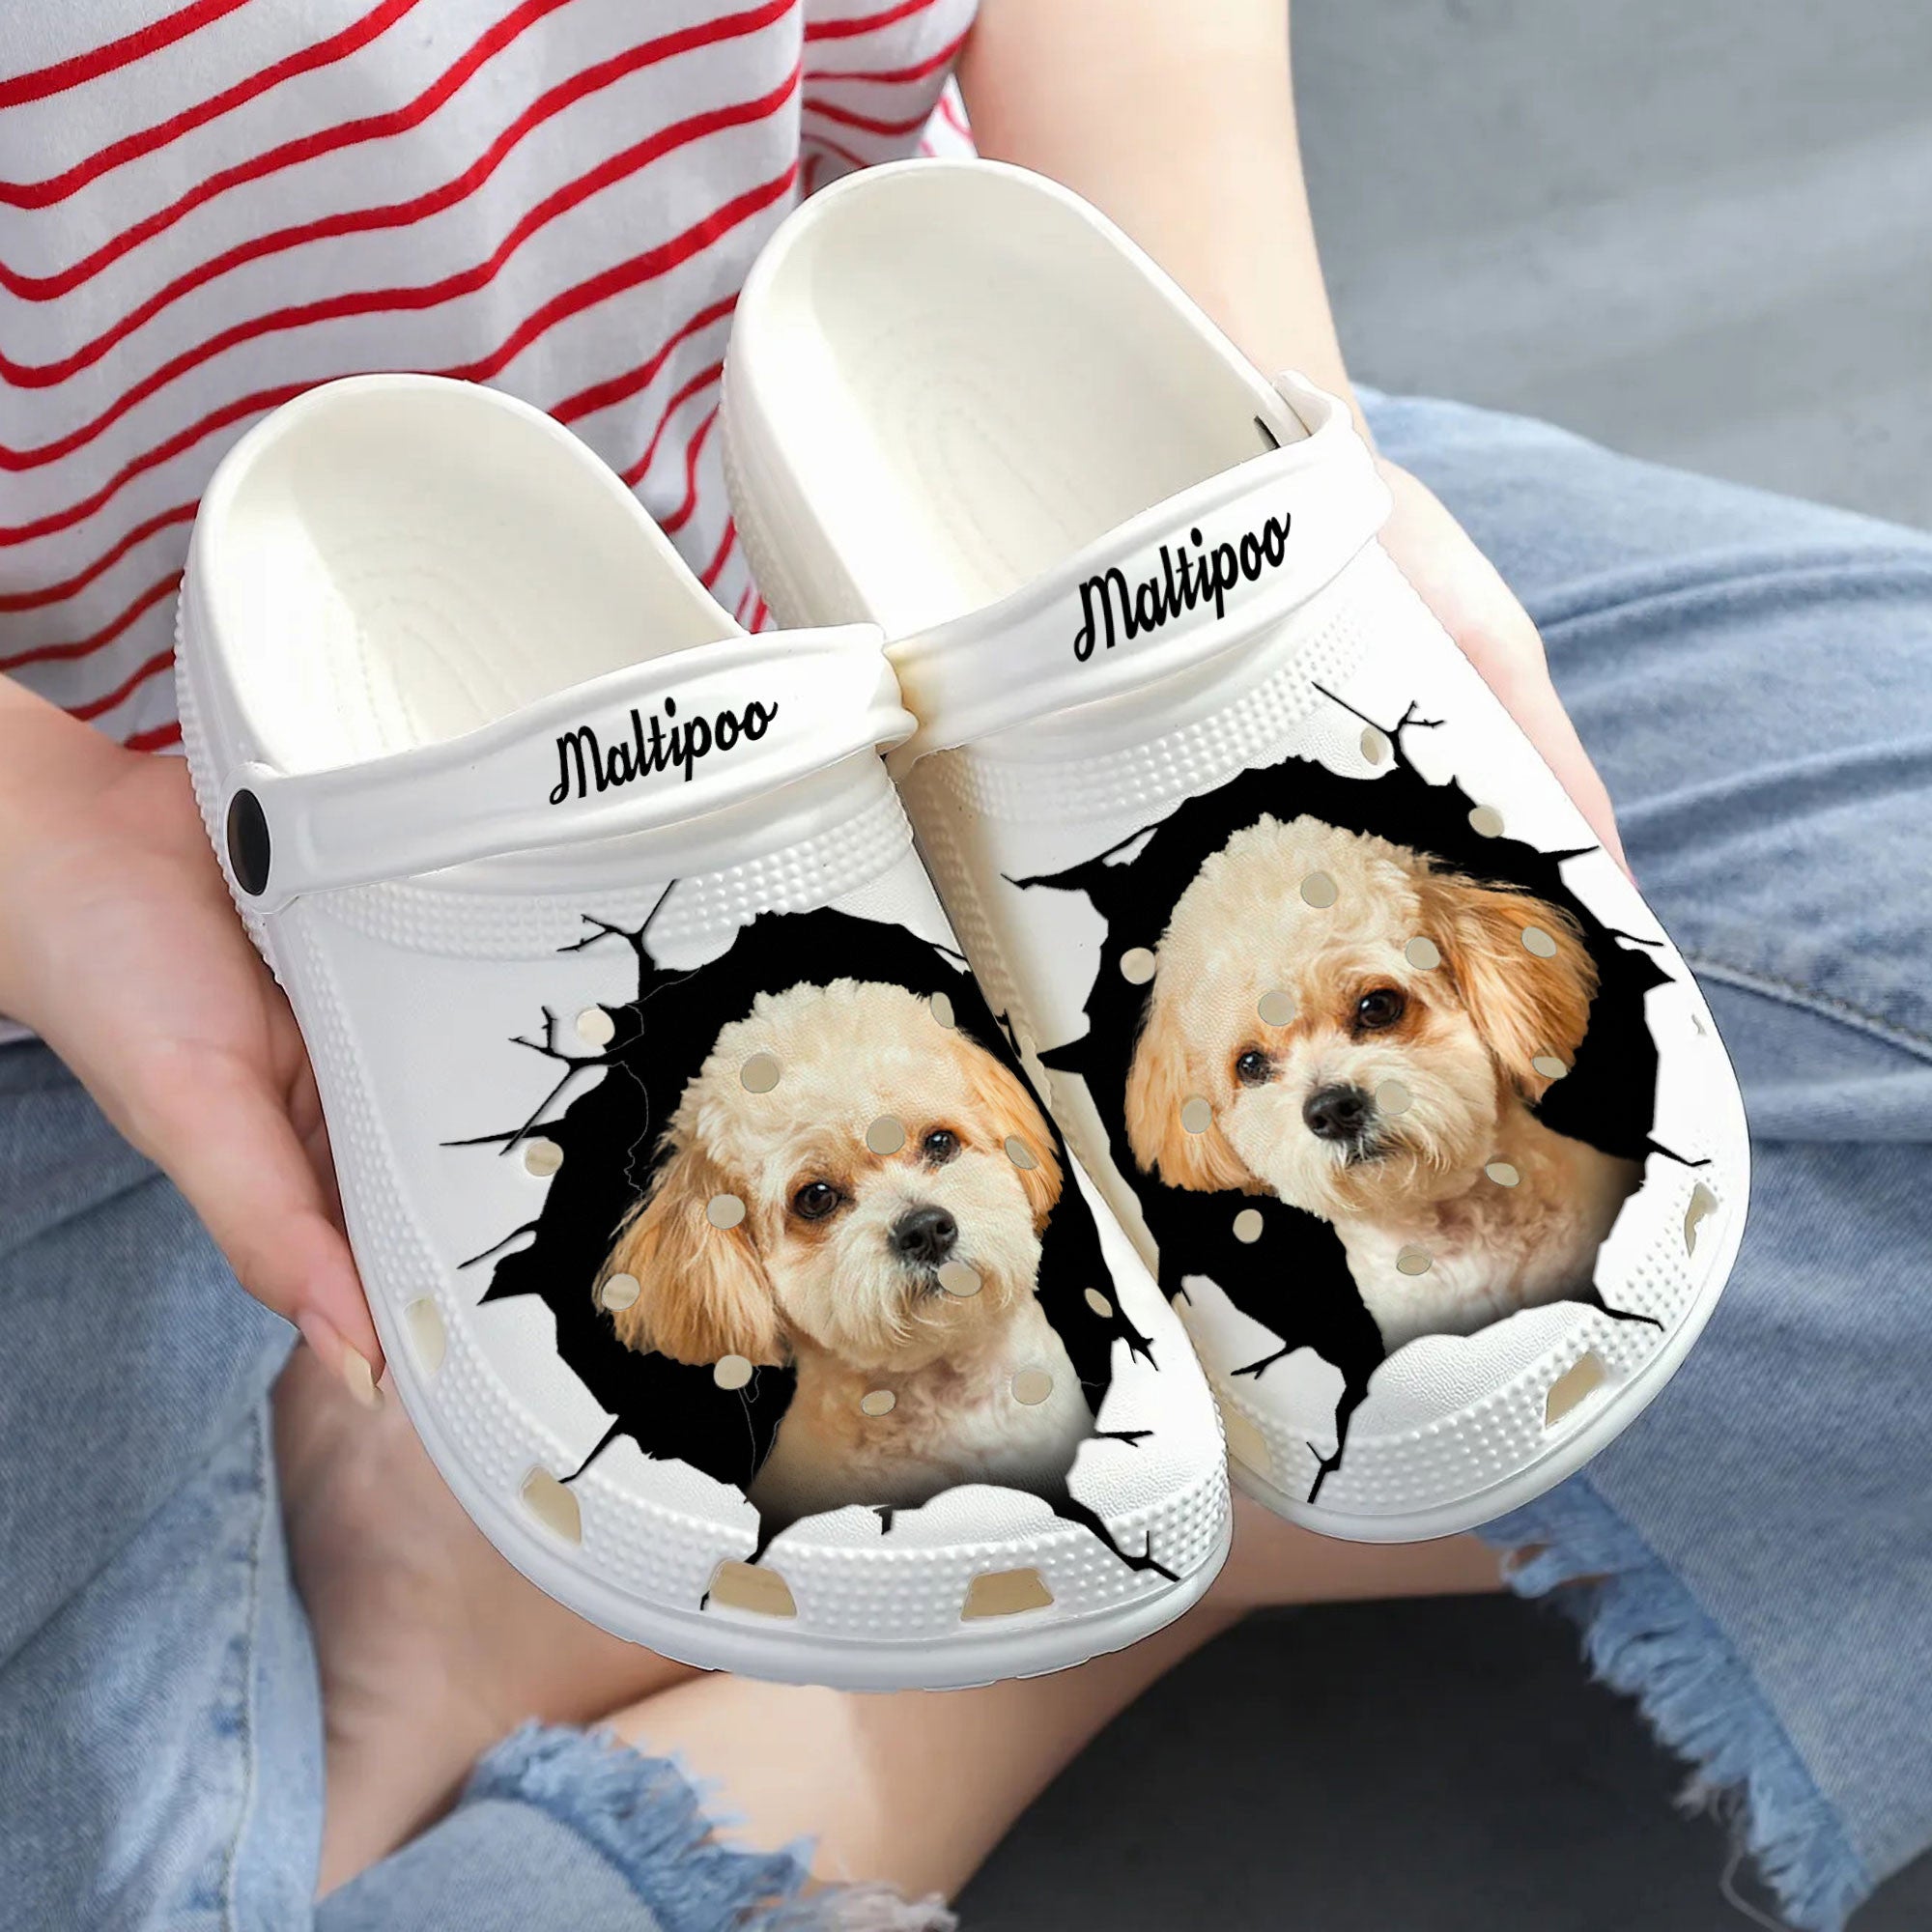 Maltipoo - 3D Graphic Custom Name Crocs Shoes